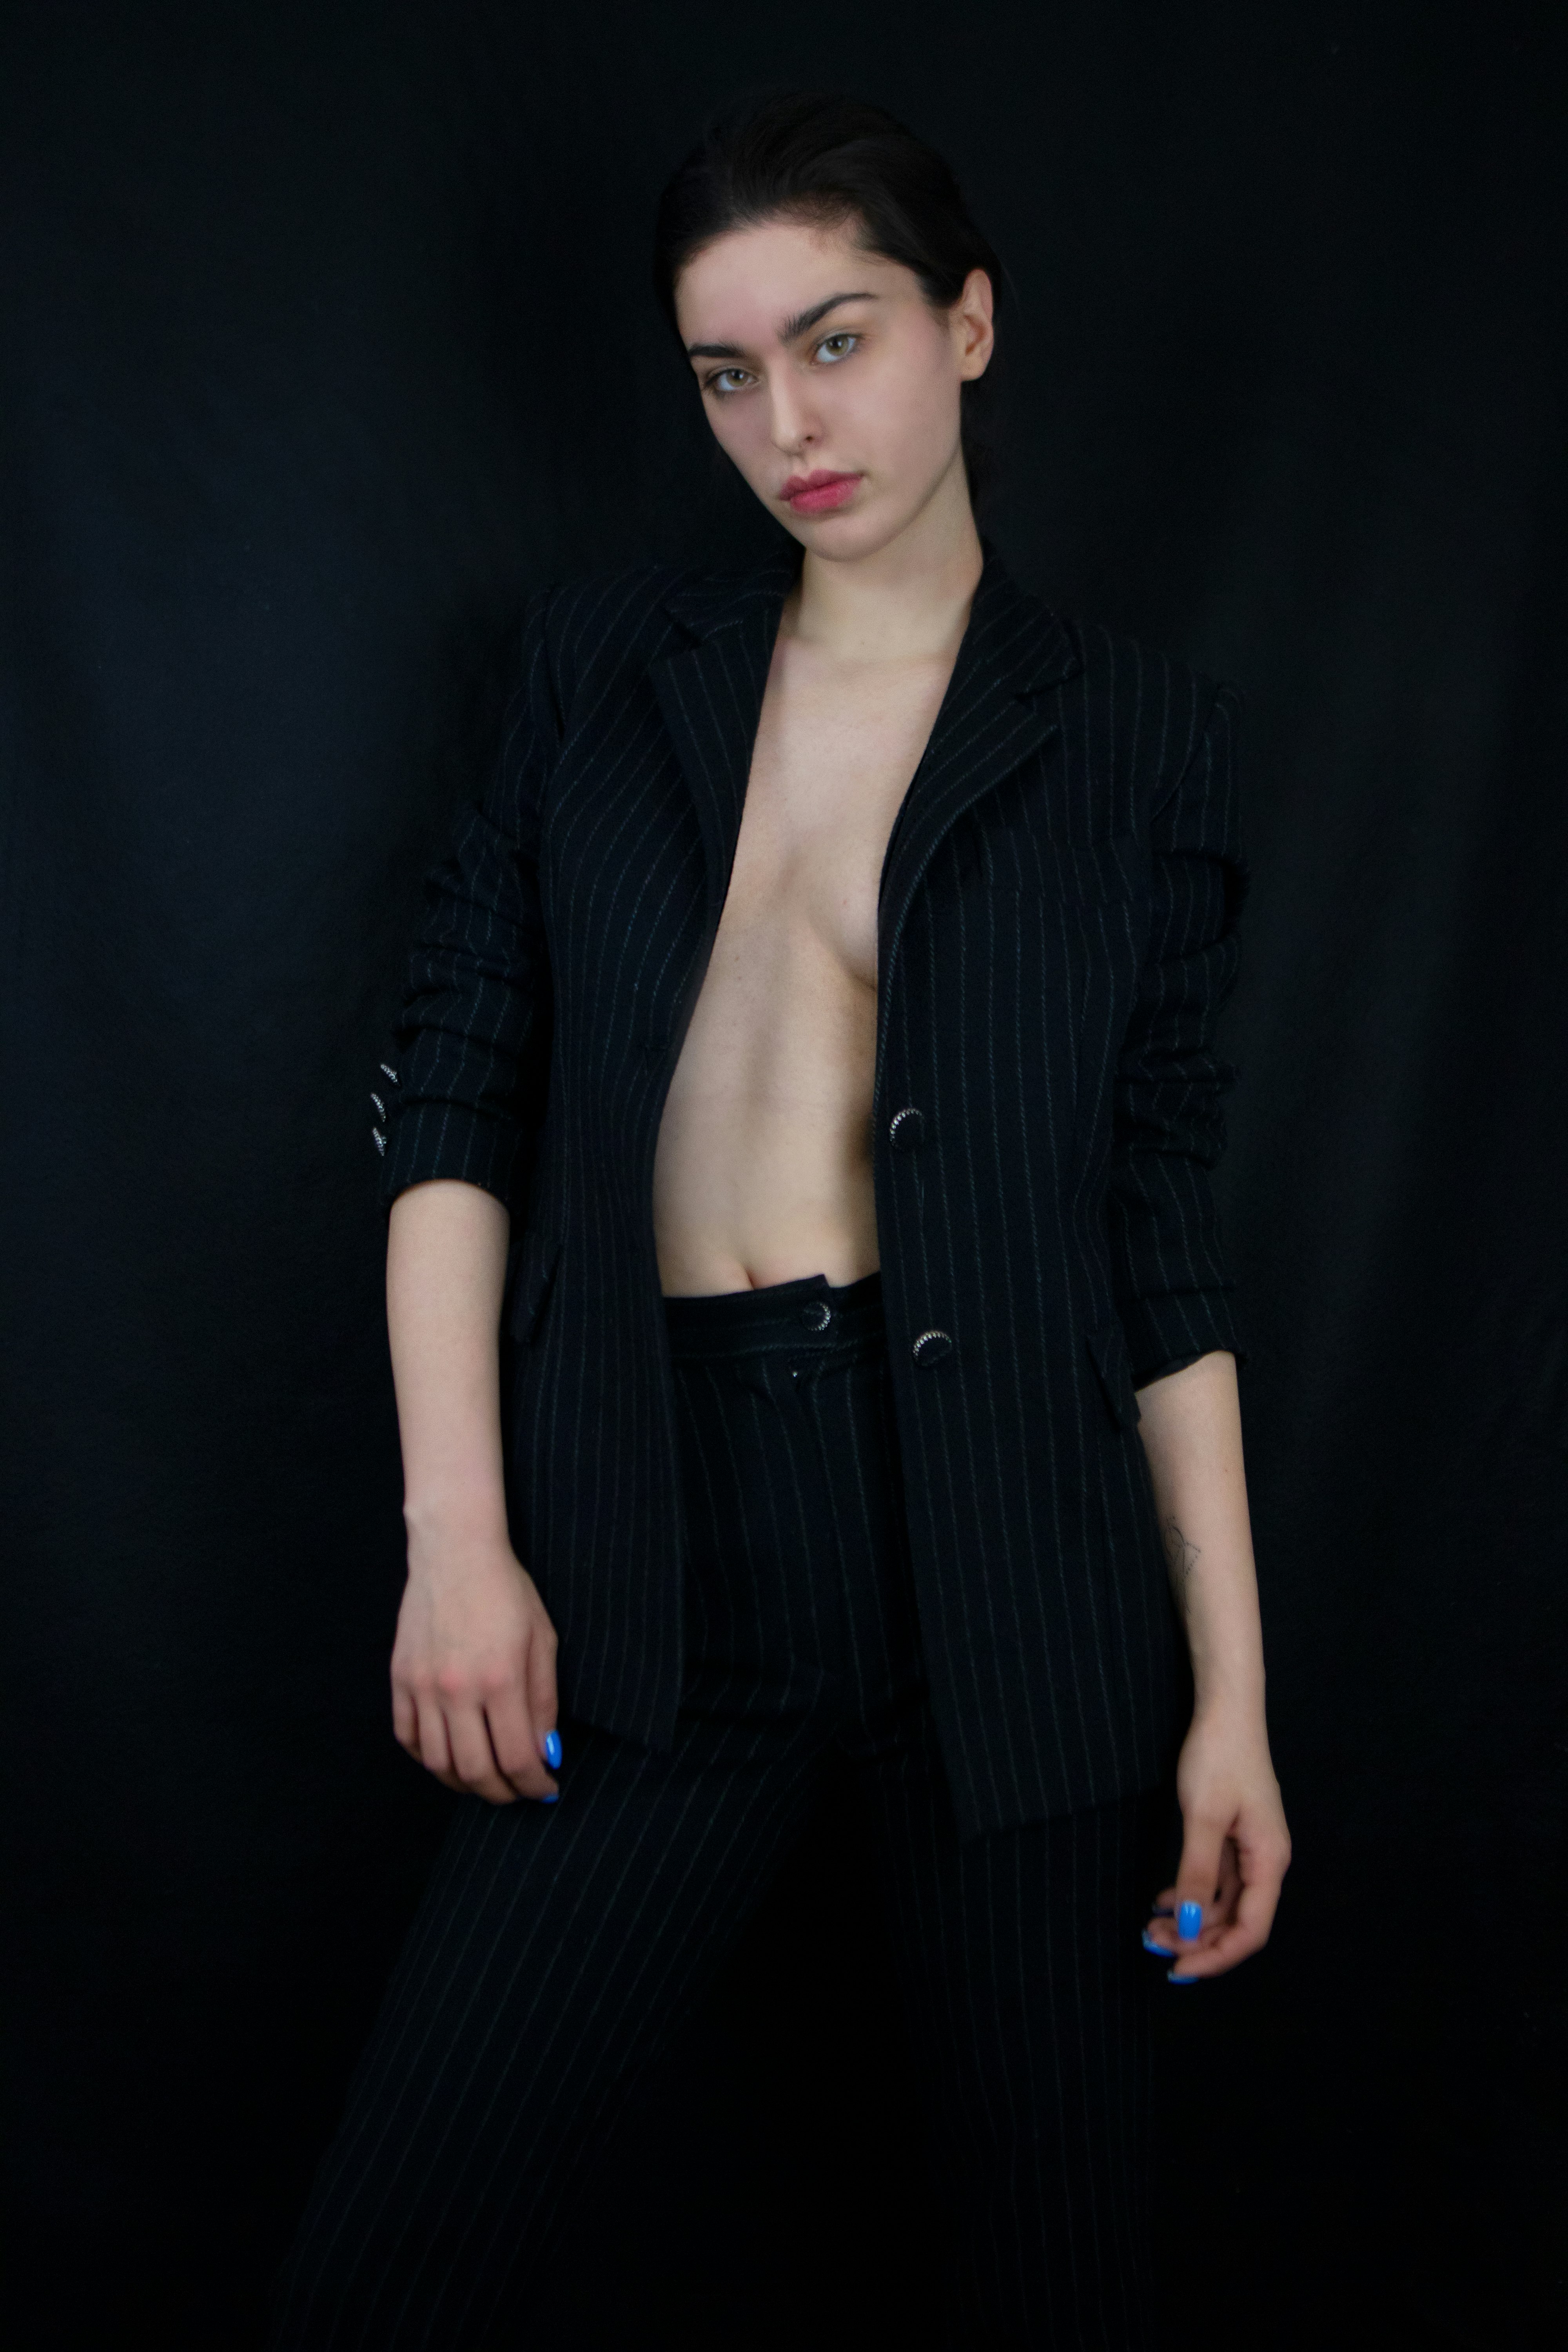 woman in black cardigan standing